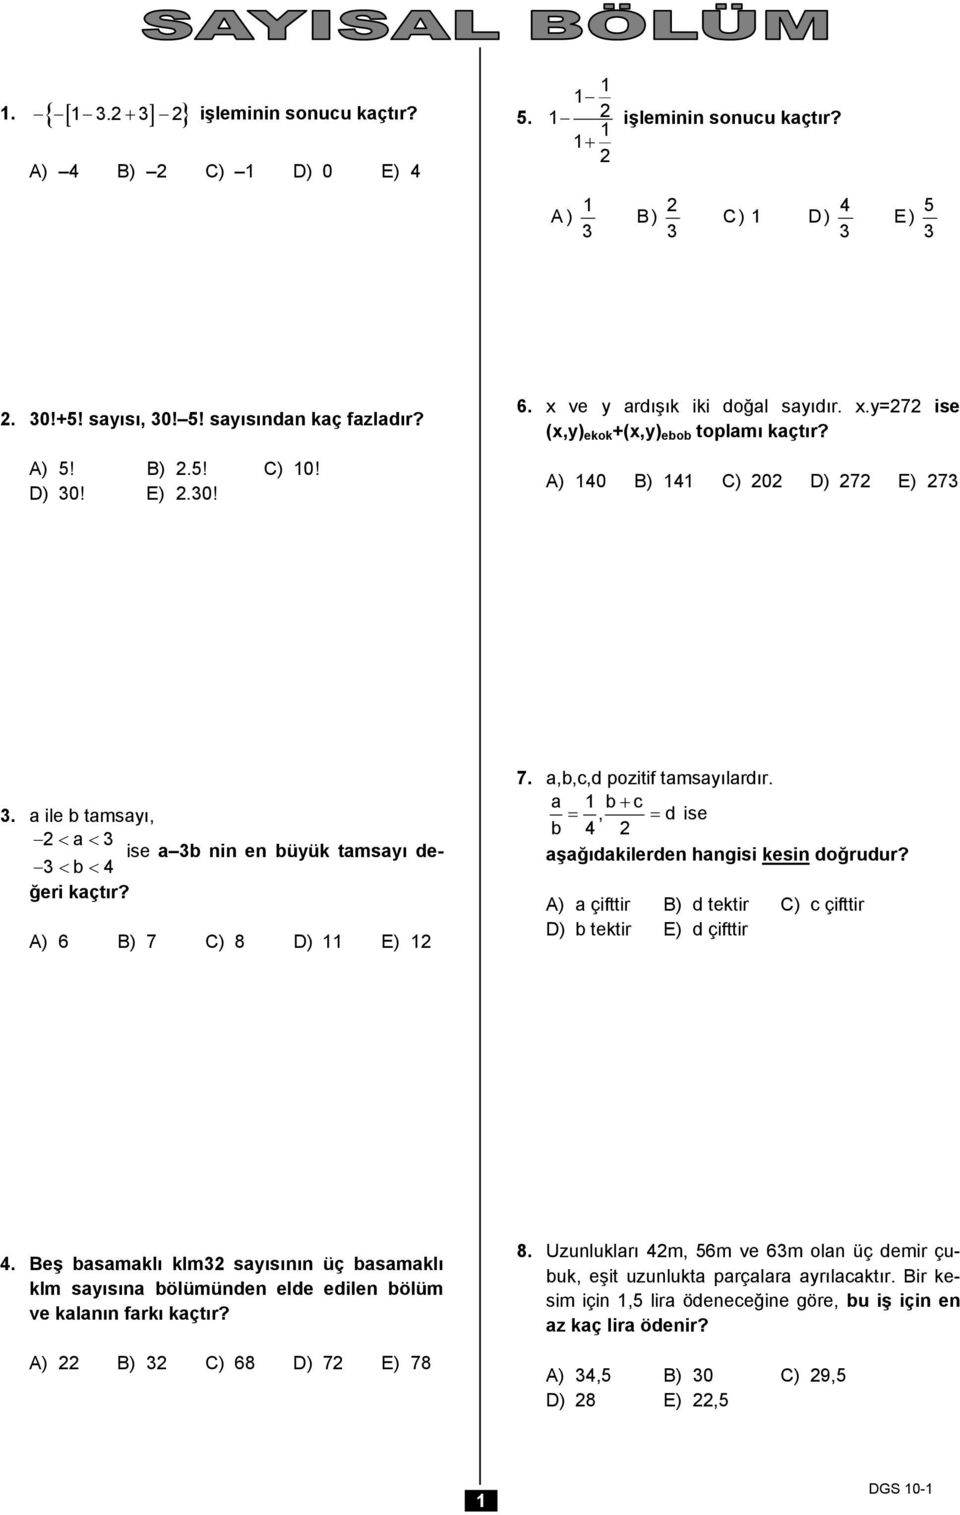 3 b 4 A) 6 ) 7 C) 8 ) E) 7. a,b,c,d pozitif tamsayılardır. a b c, d ise b 4 aşağıdakilerden hangisi kesin doğrudur? A) a çifttir ) d tektir C) c çifttir ) b tektir E) d çifttir 4.